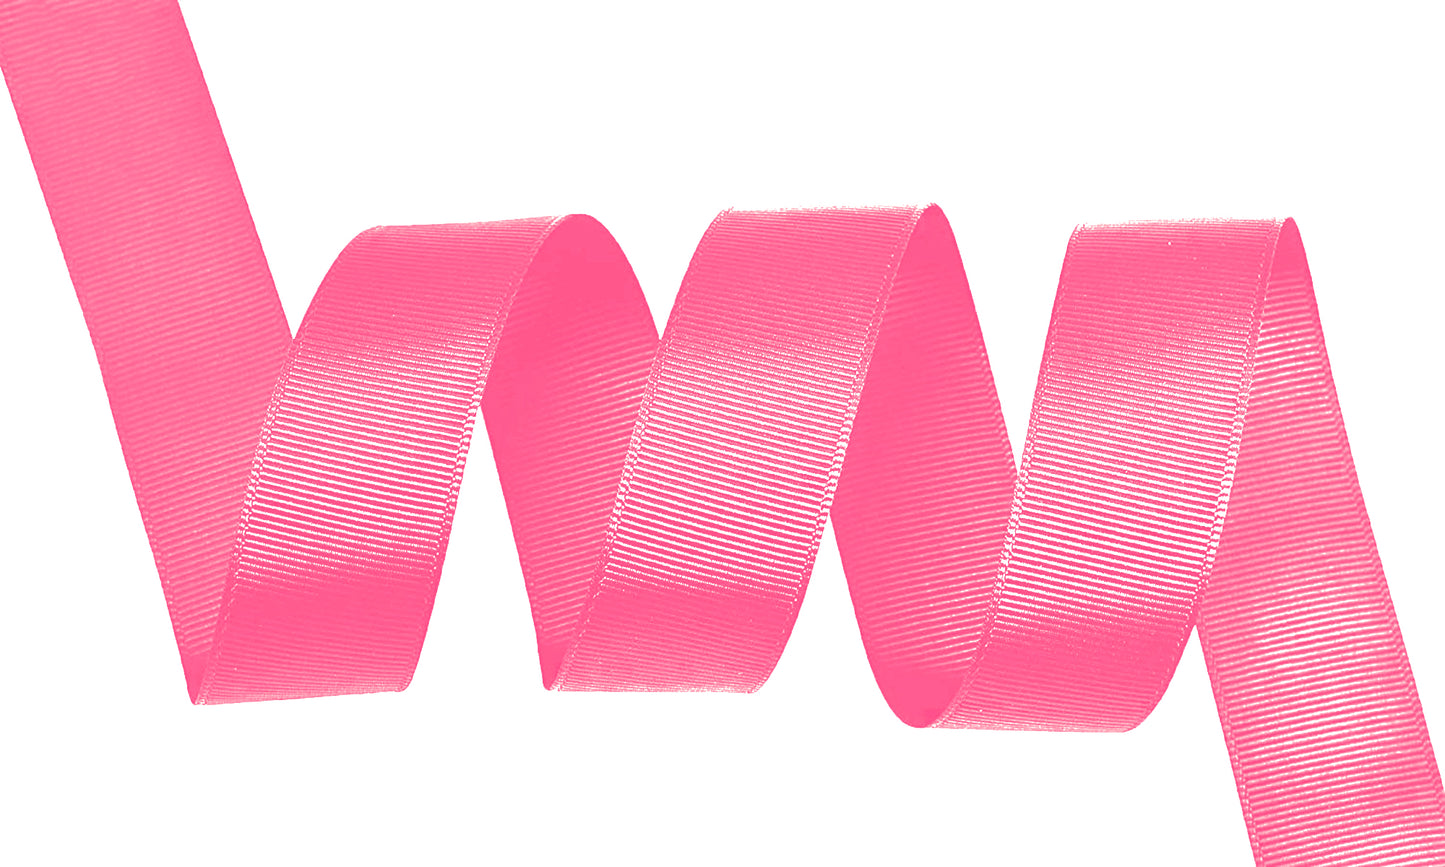 5 Yards Solid Bright Pink Grosgrain Ribbon Yardage DIY Crafts Bows USA